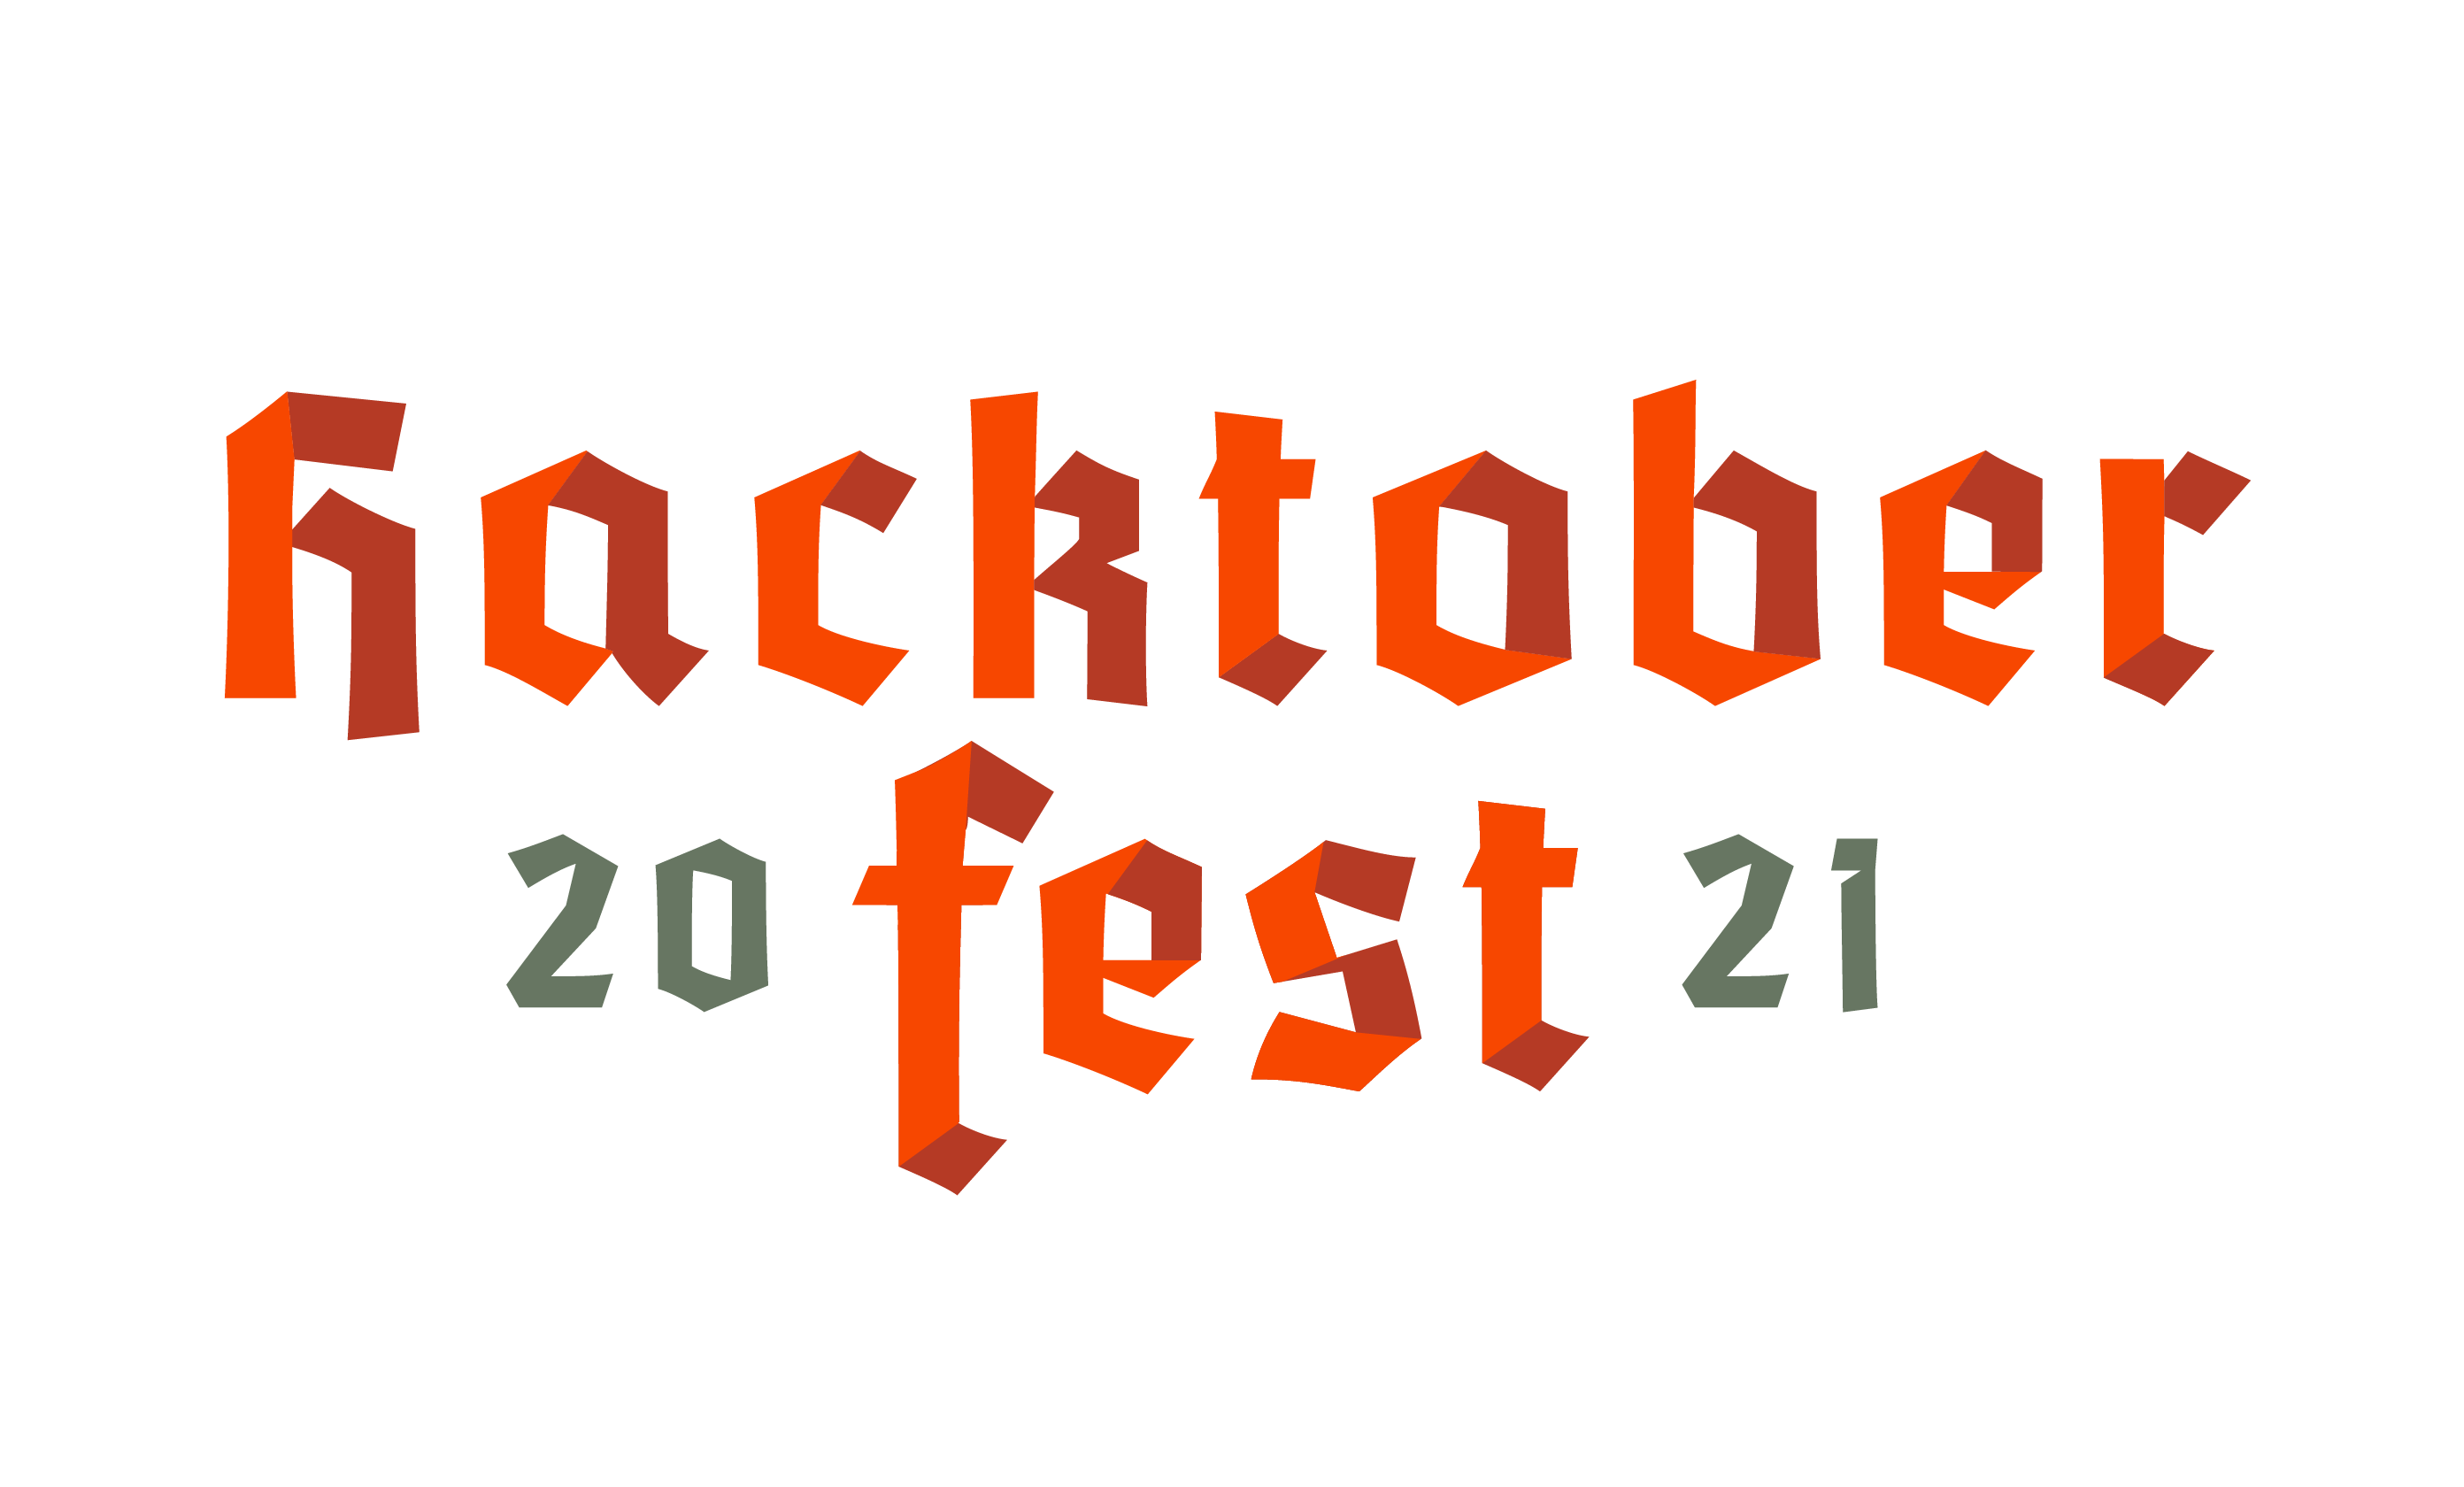 Hacktoberfest 2021 Logo